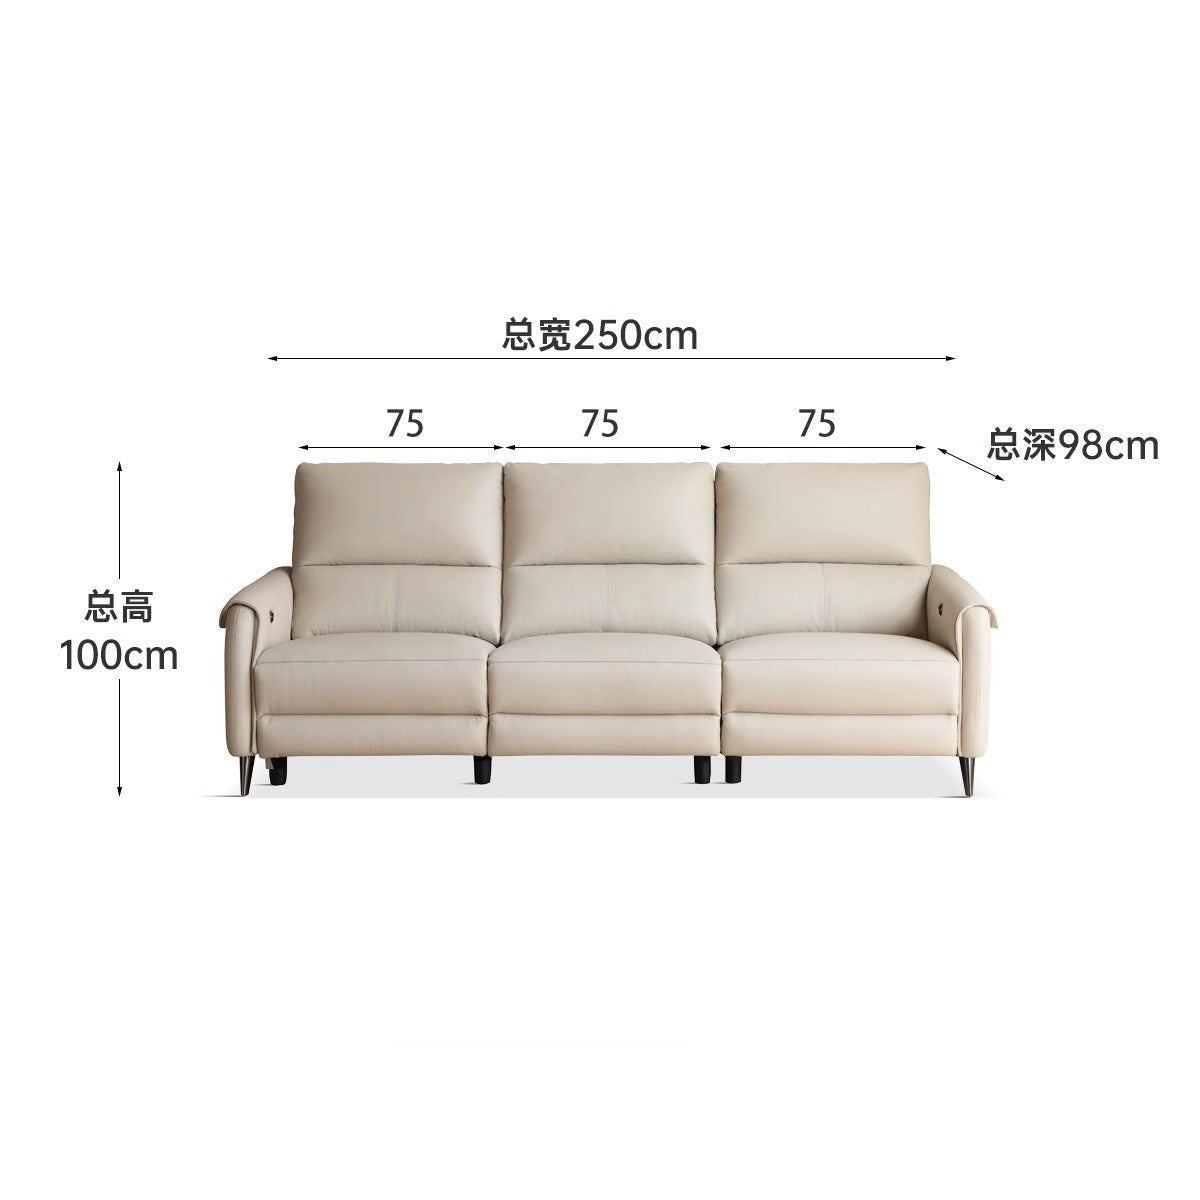 Genuine leather zero wall multifunctional electric sofa, top layer cowhide sofa+